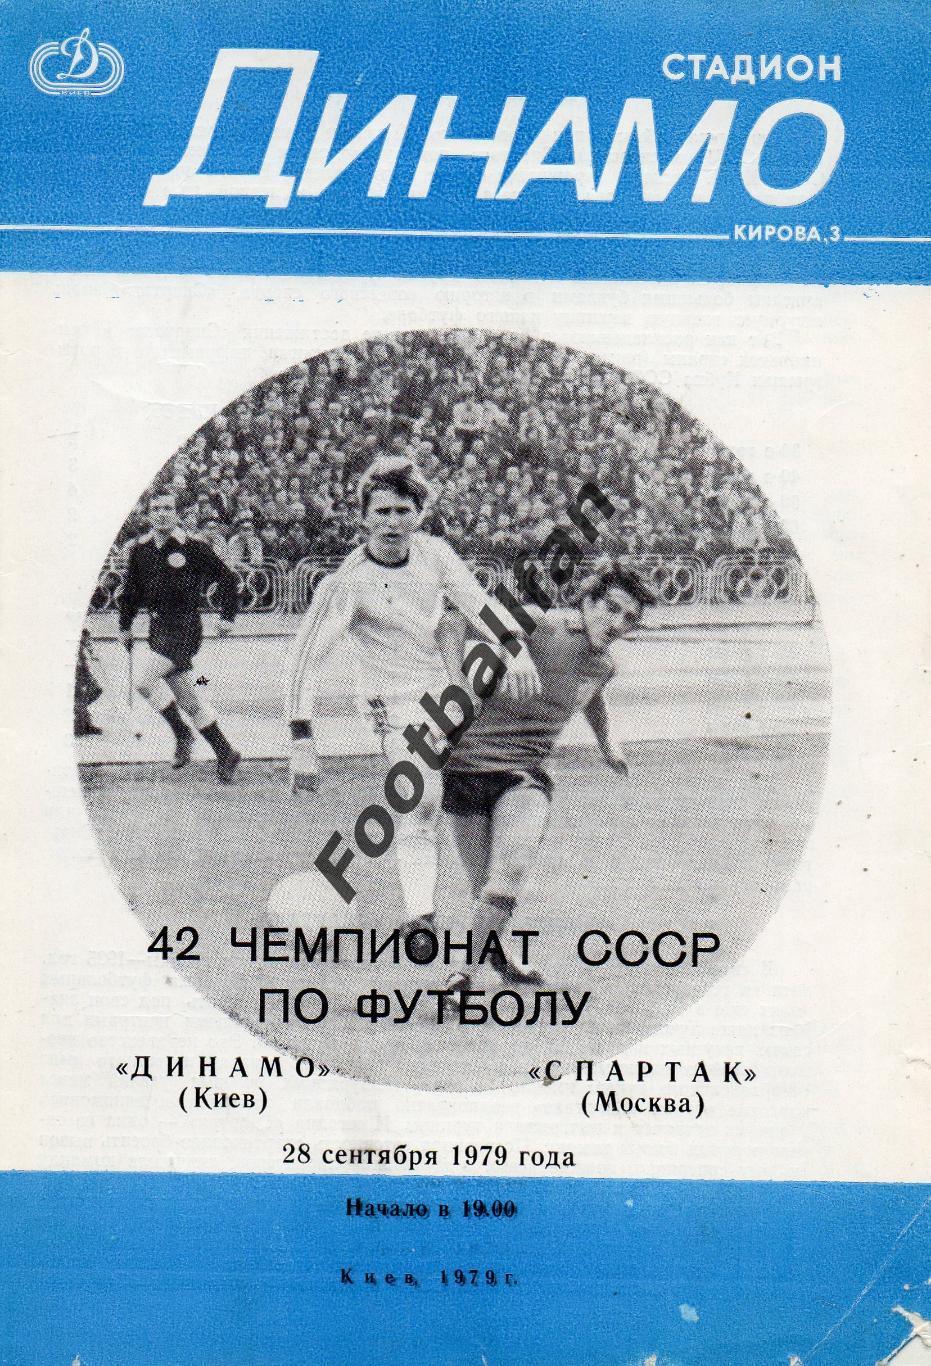 Динамо Киев - Торпедо Москва 28.09.1979